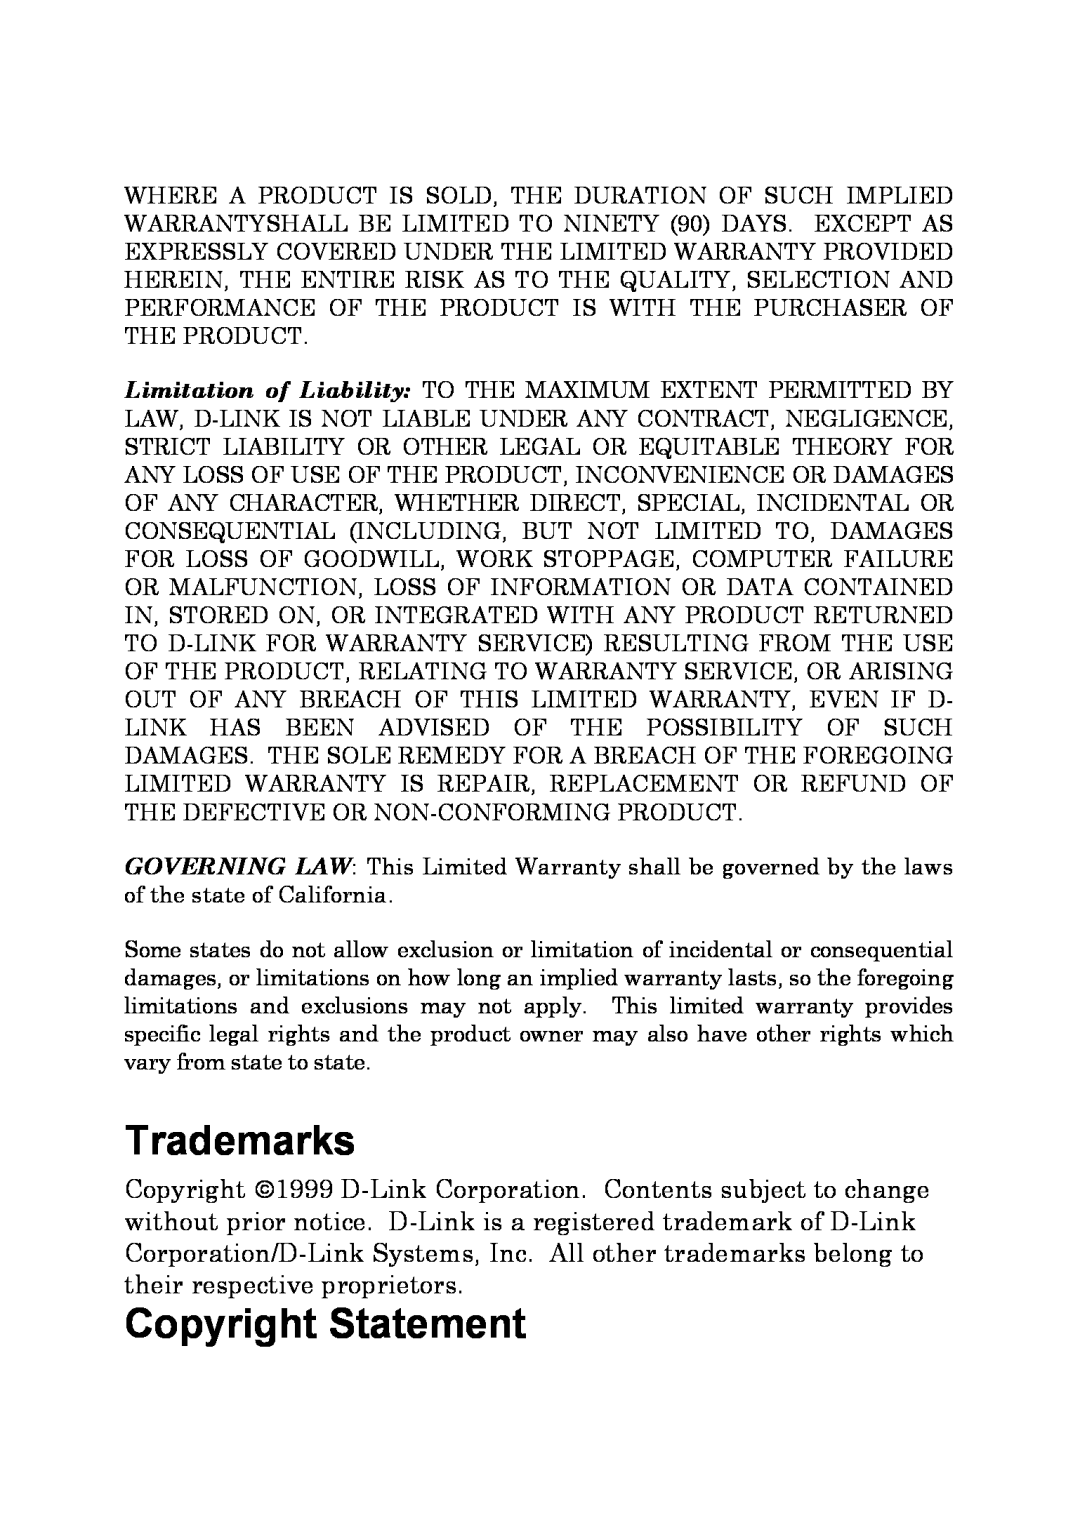 D-Link DSS-5 manual Trademarks, Copyright Statement 